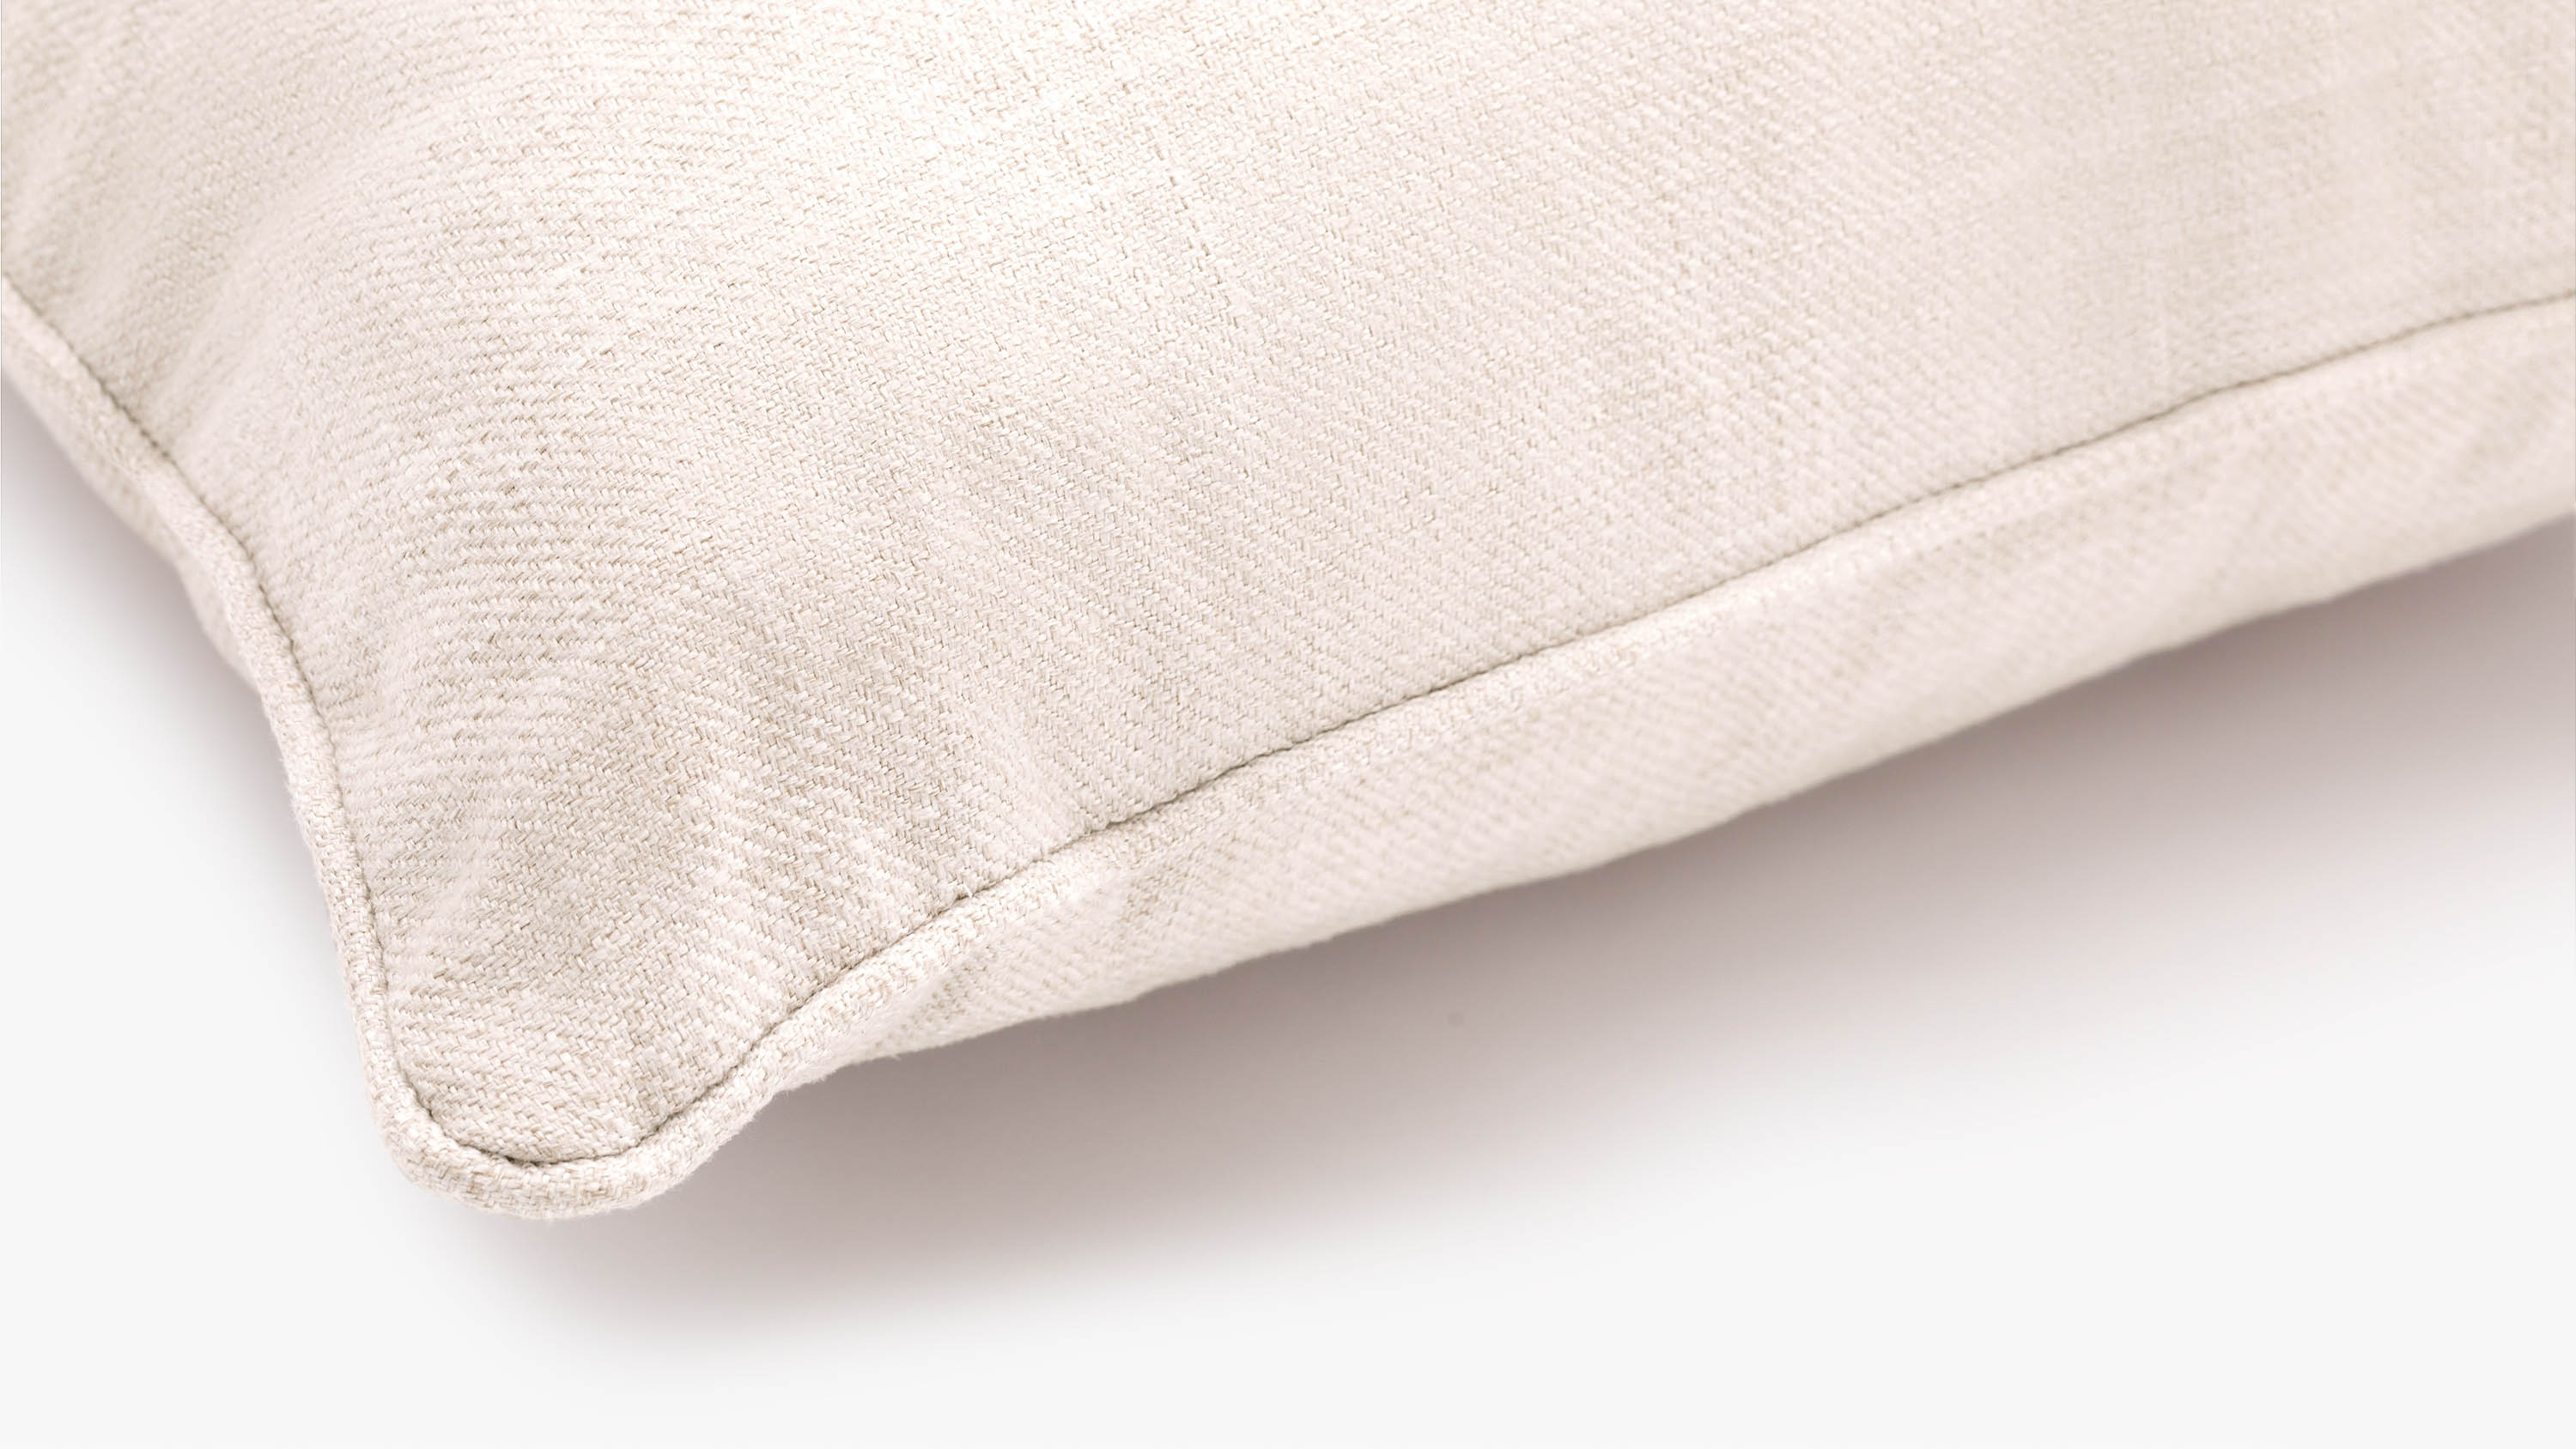 The eden fabric cushion - cream